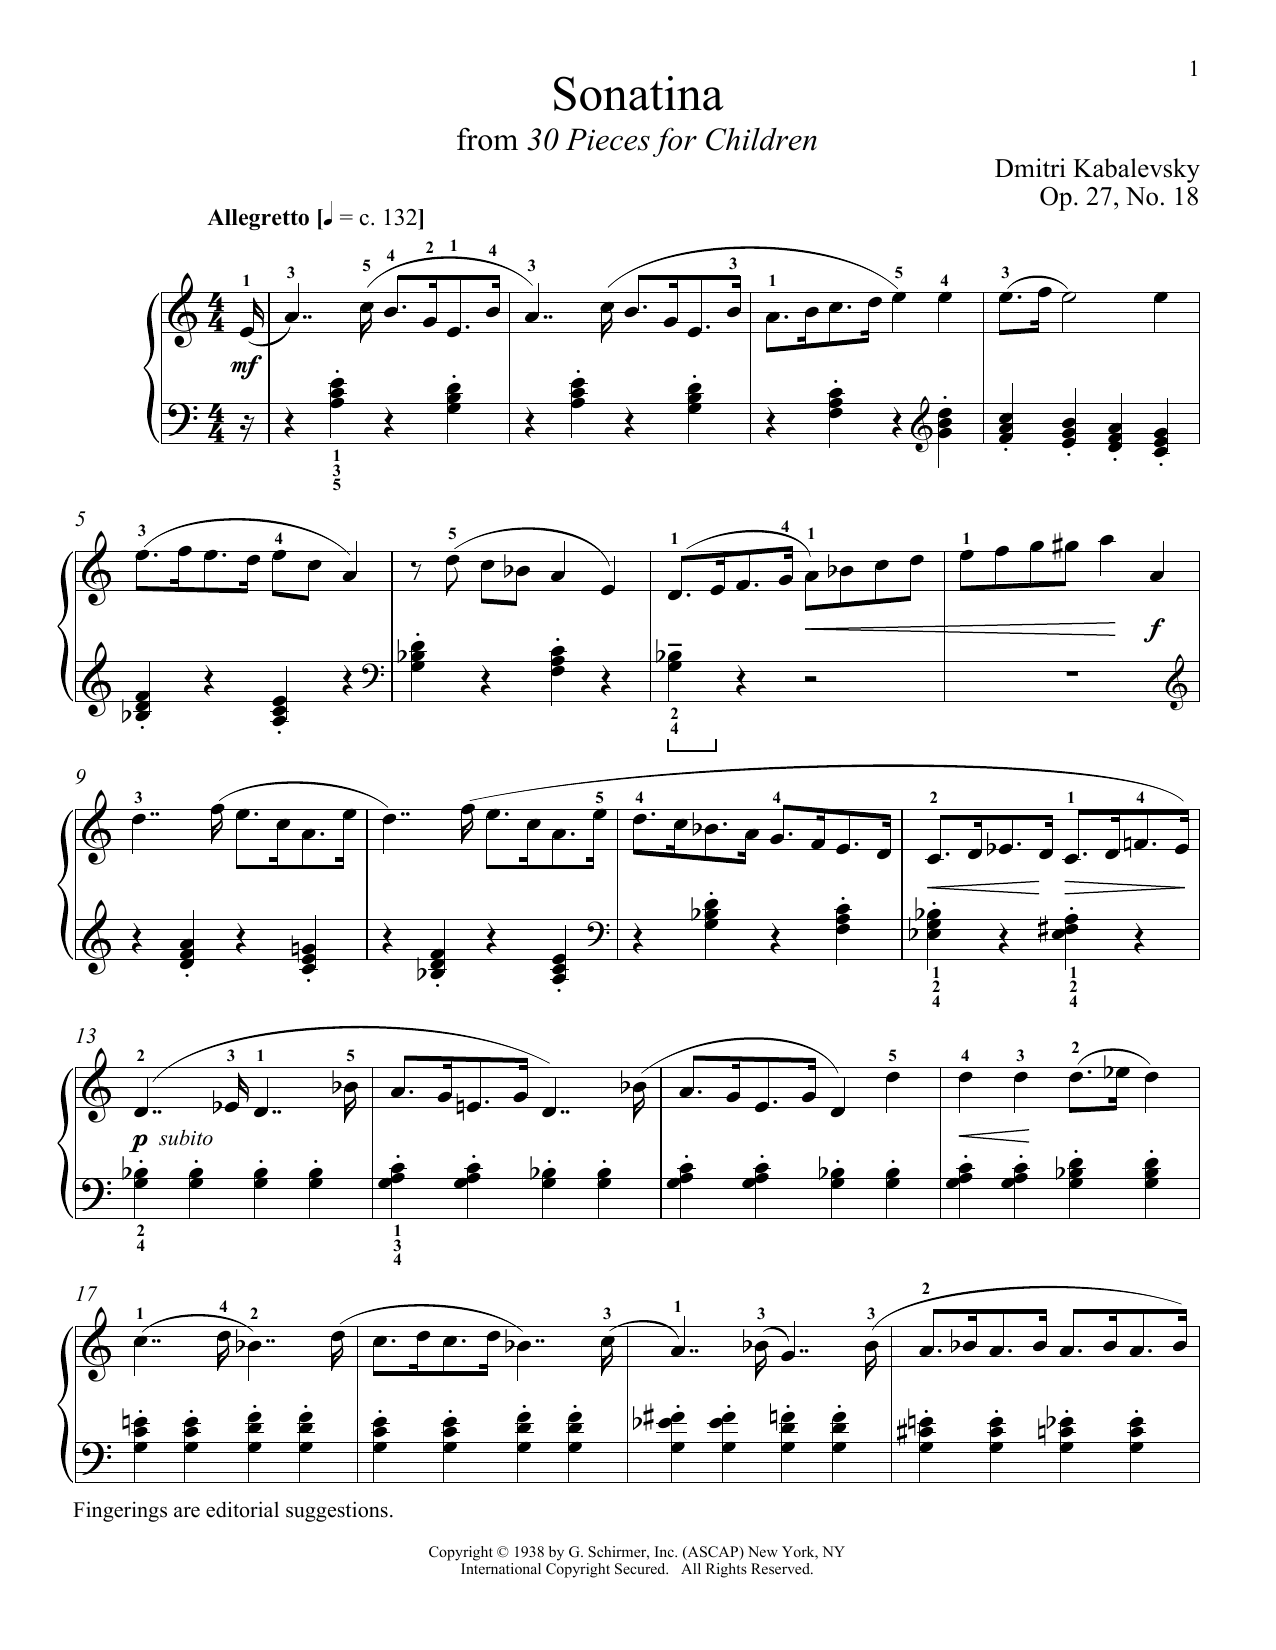 Dmitri Kabalevsky Sonatina Sheet Music Notes & Chords for Piano - Download or Print PDF